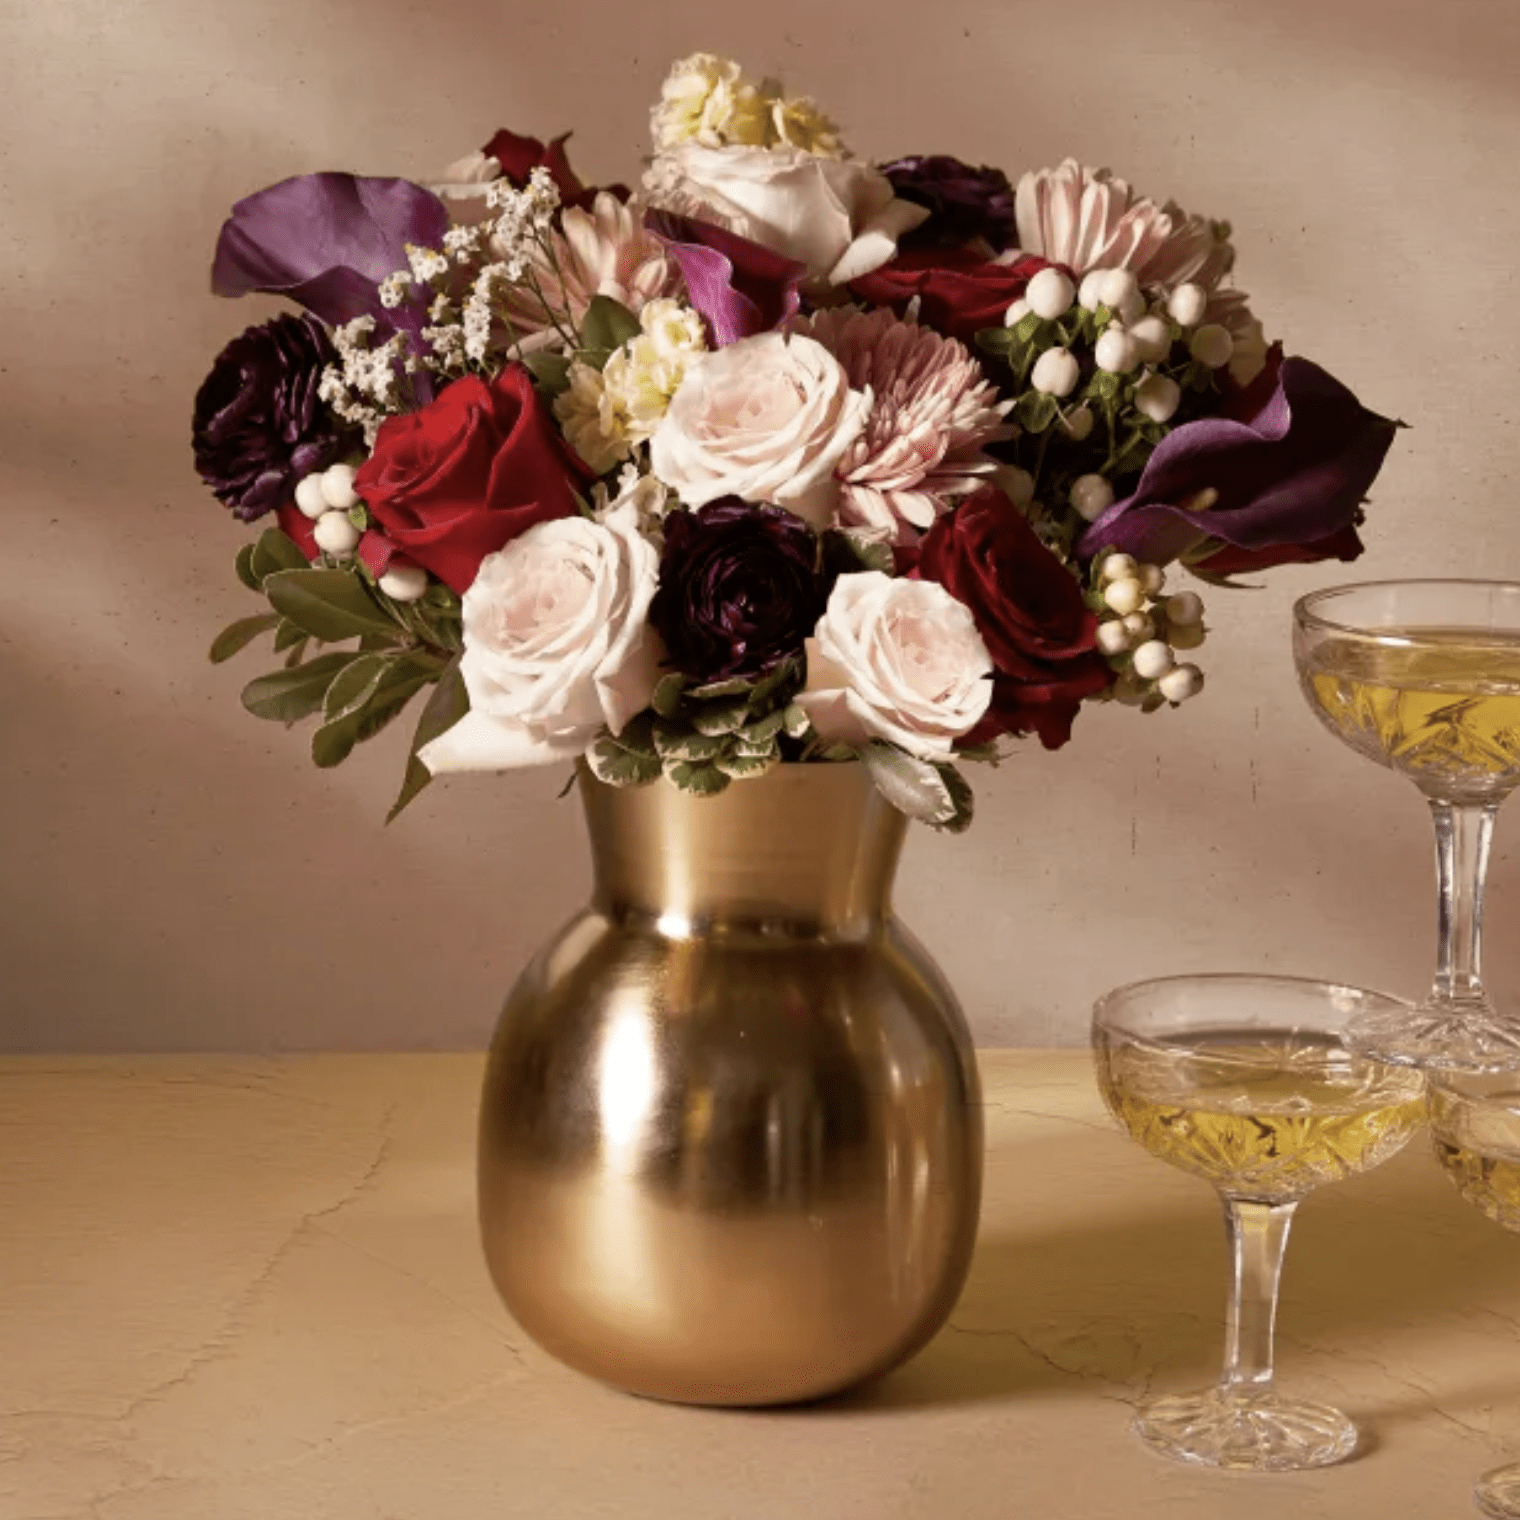 Floral Wine Glasses from Venus et Fleur Valentine's Day Gifts